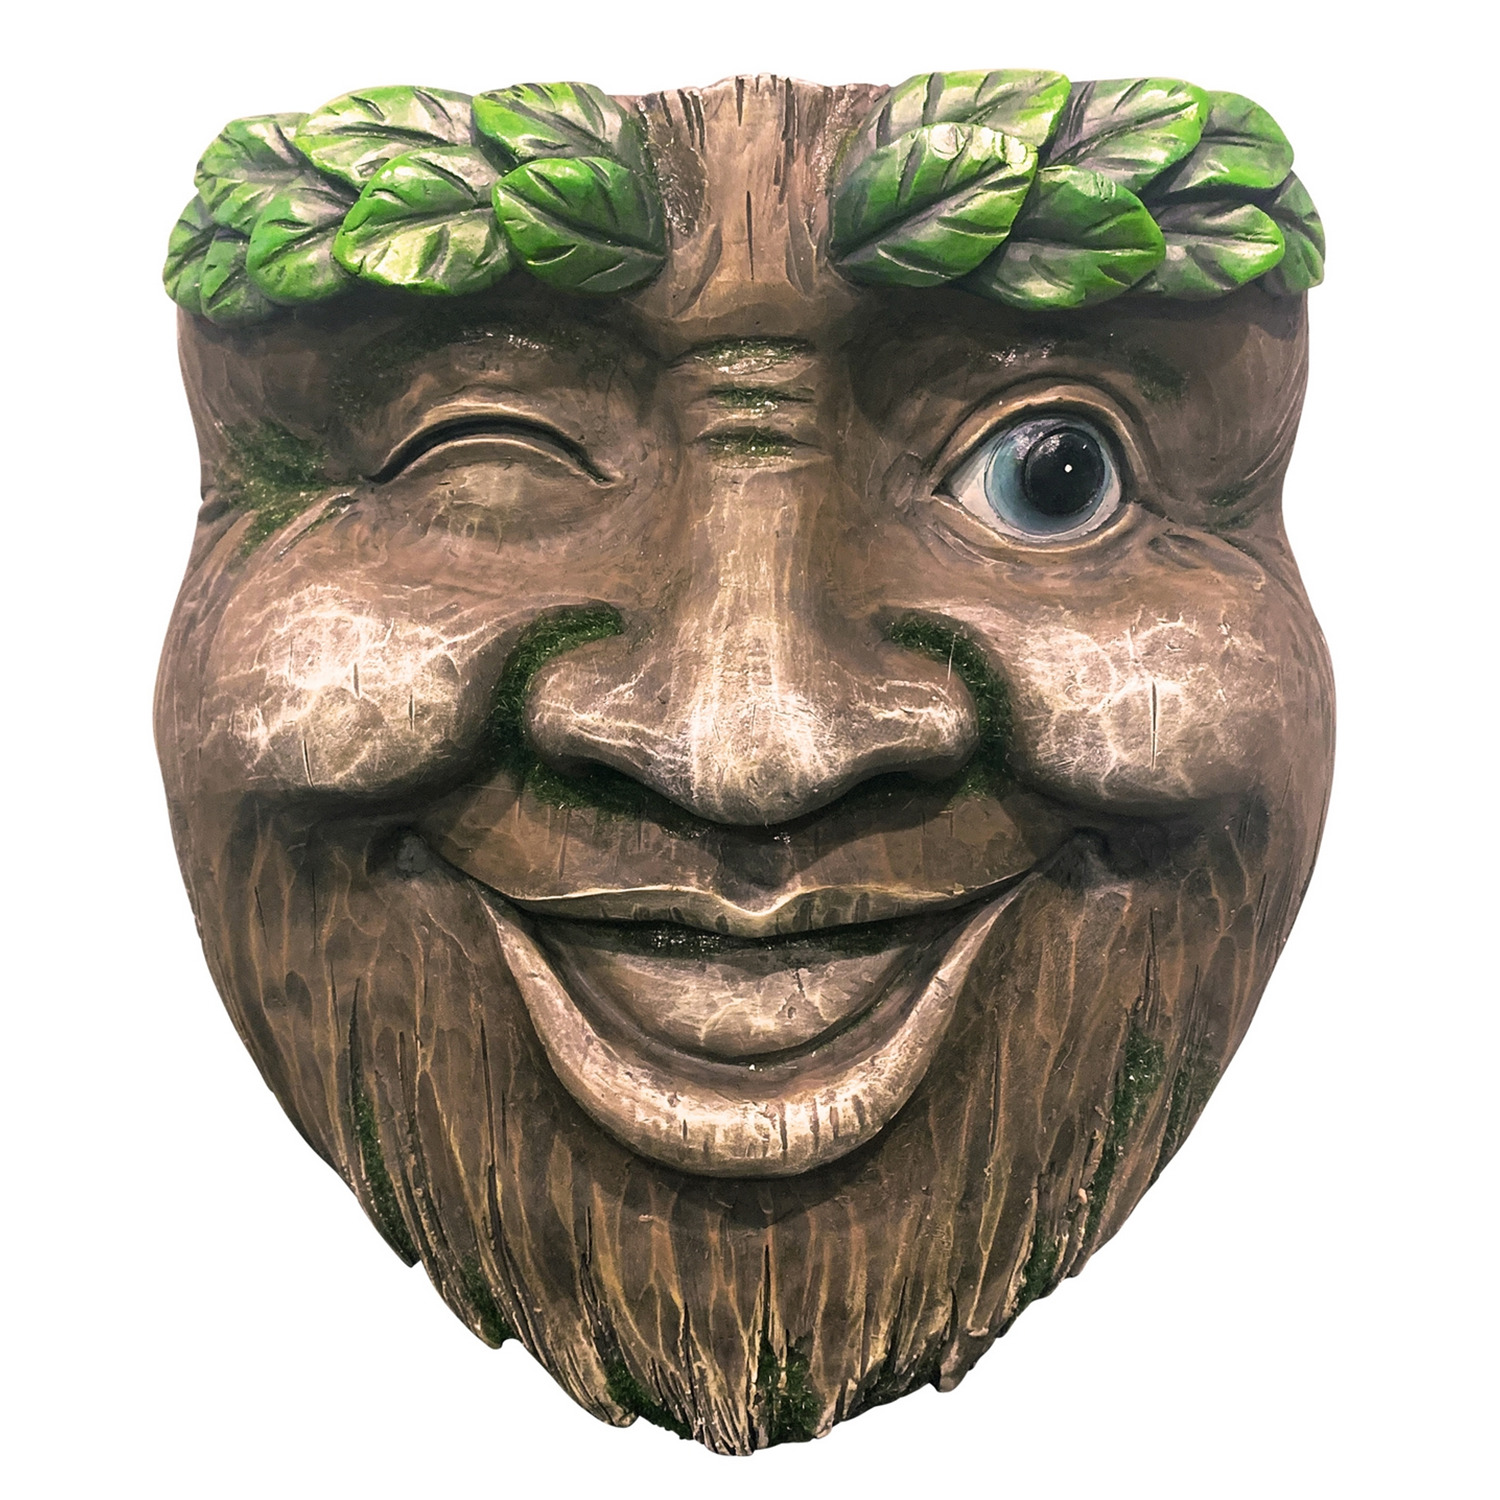 Red Carpet Studios Planter Tree Face Wink - image 1 of 2